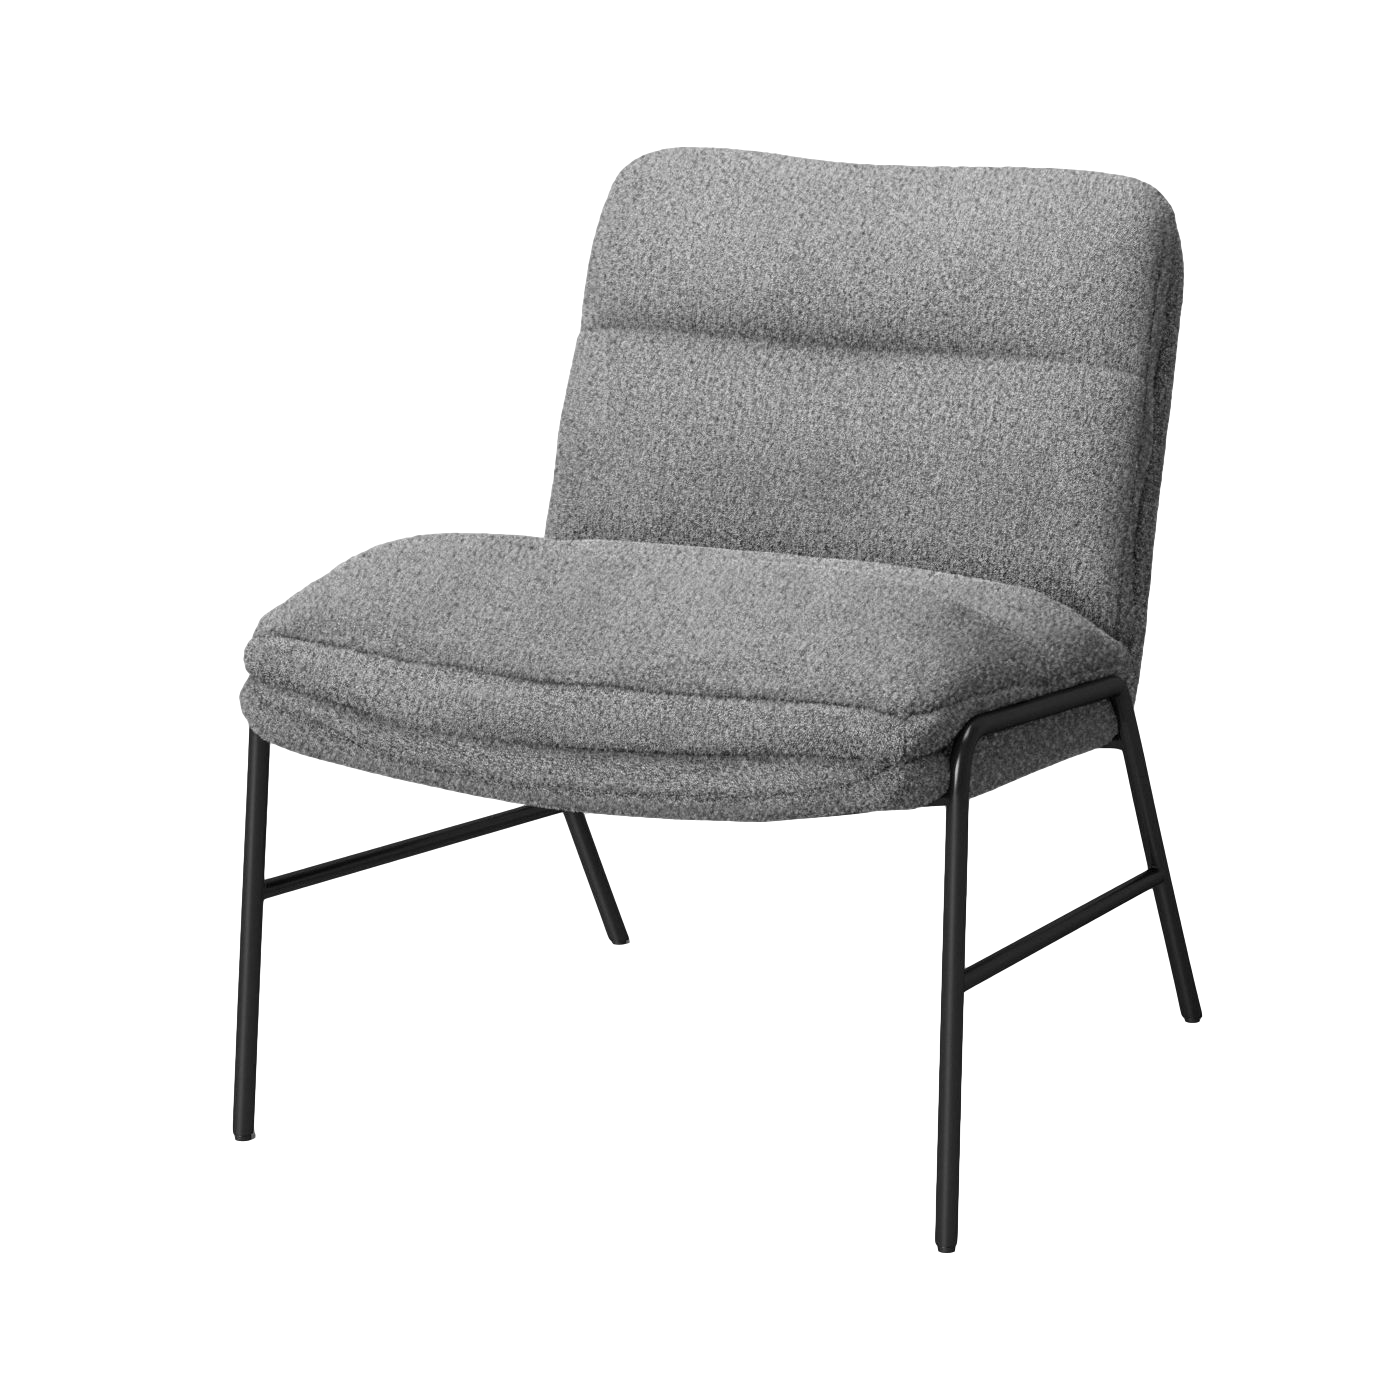 grey slipper chair